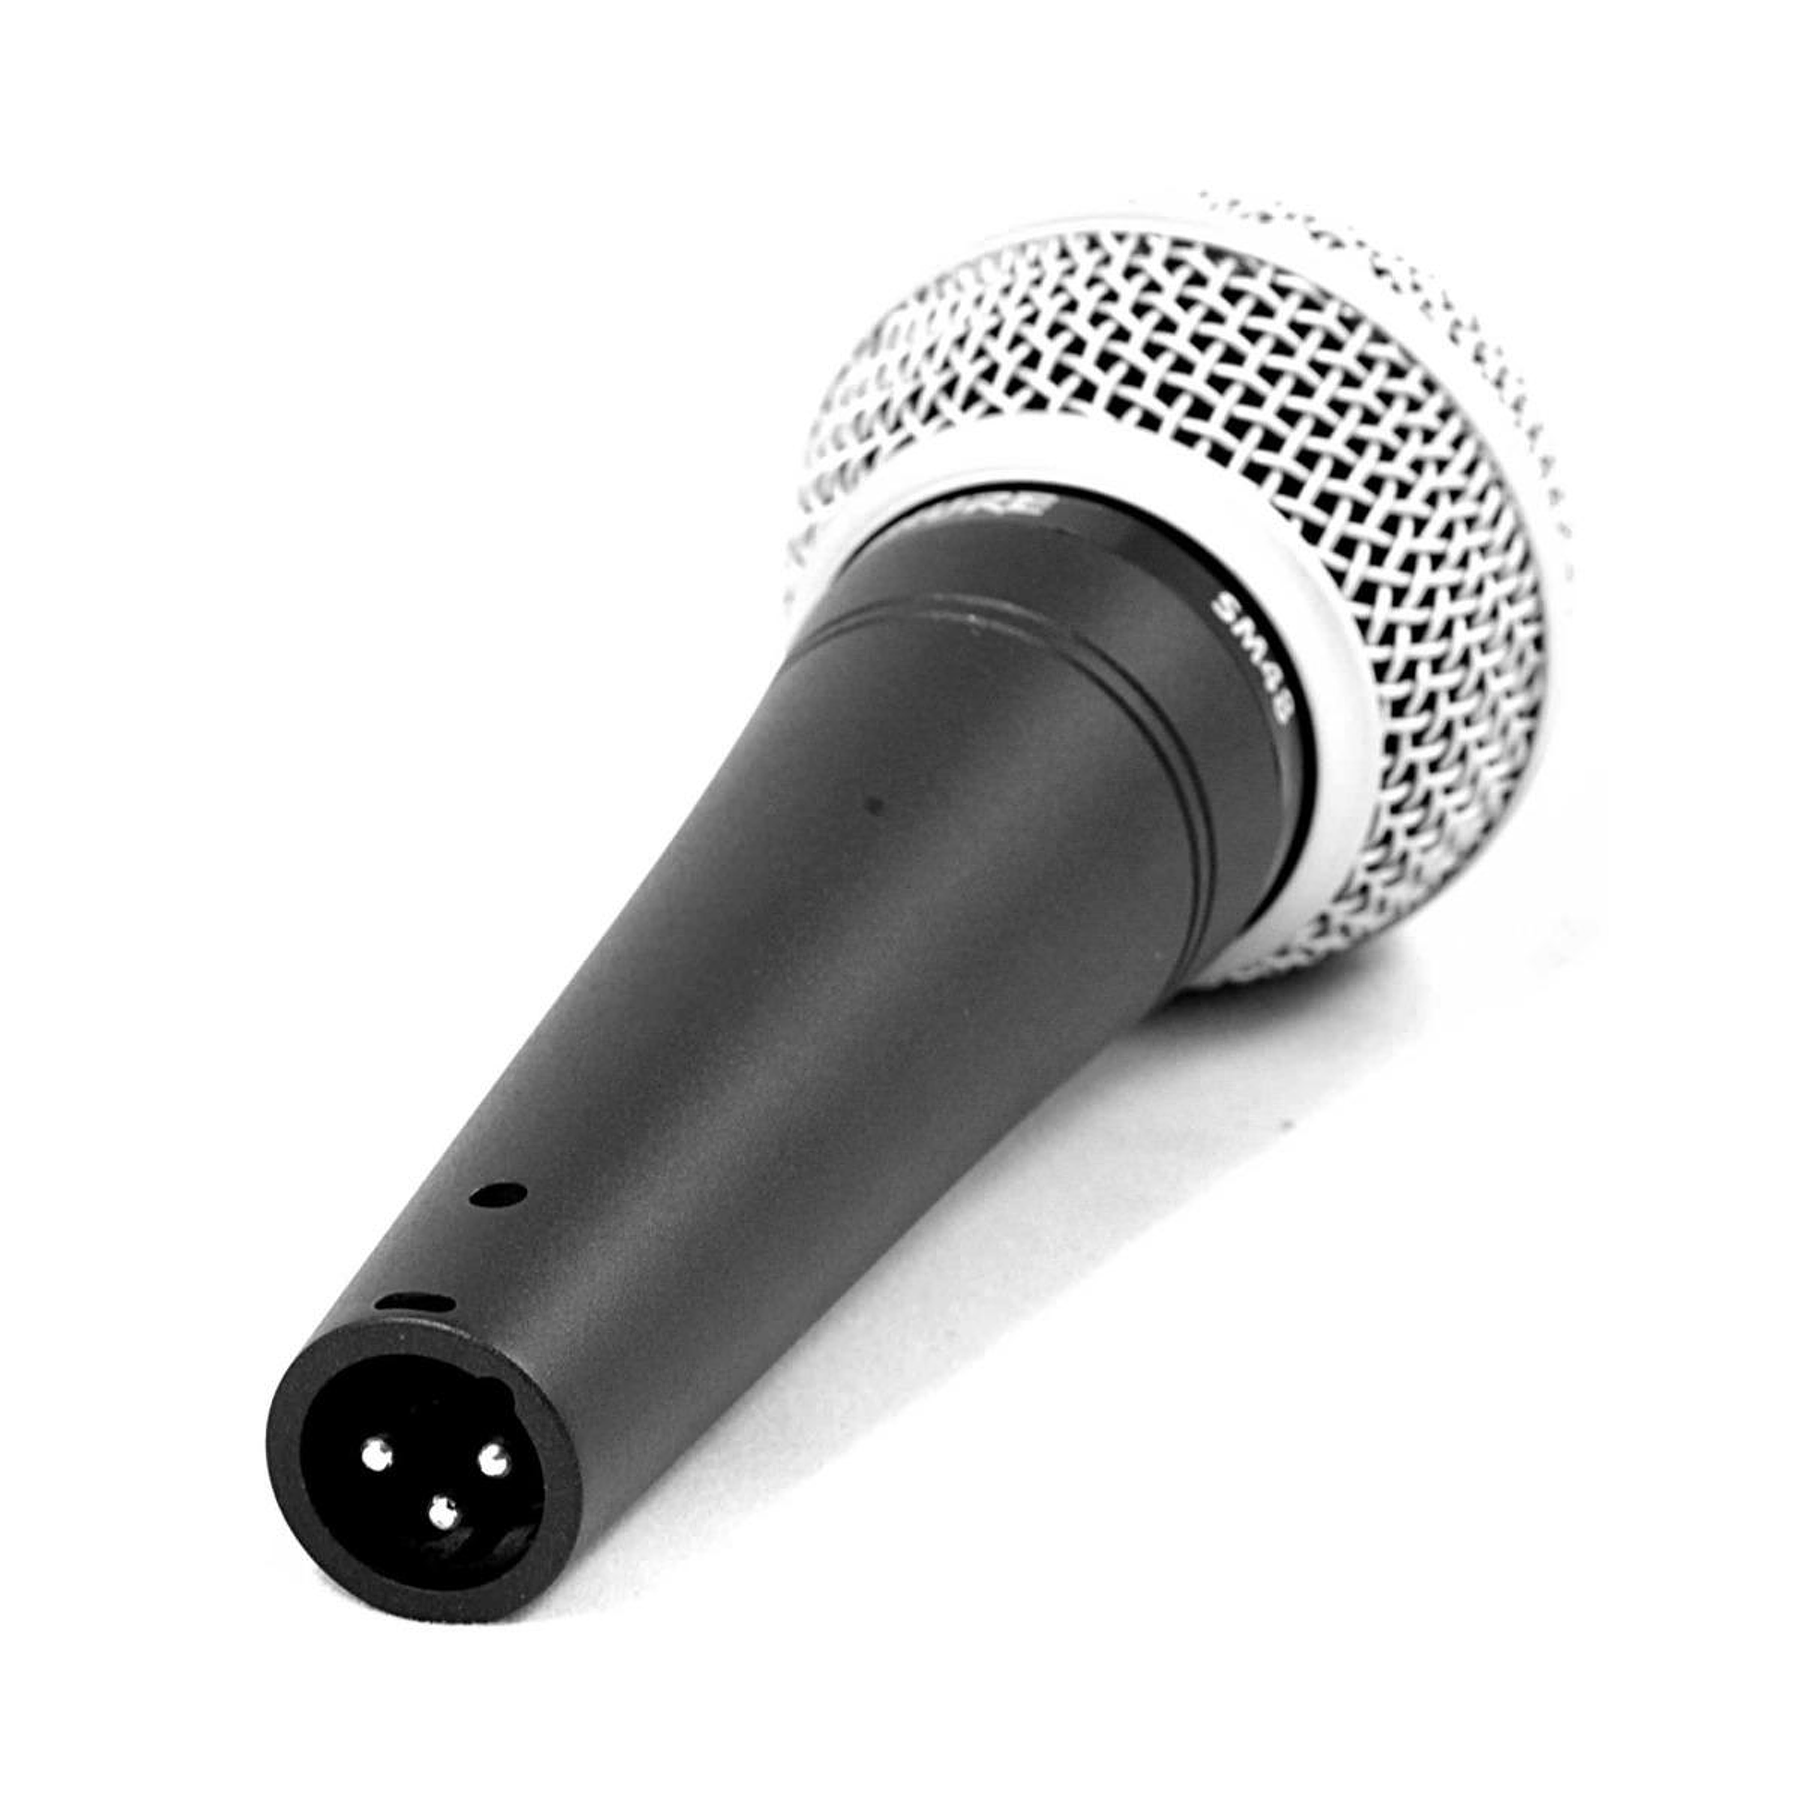 Microfono Vocal Dinamico Shure SM48-LC